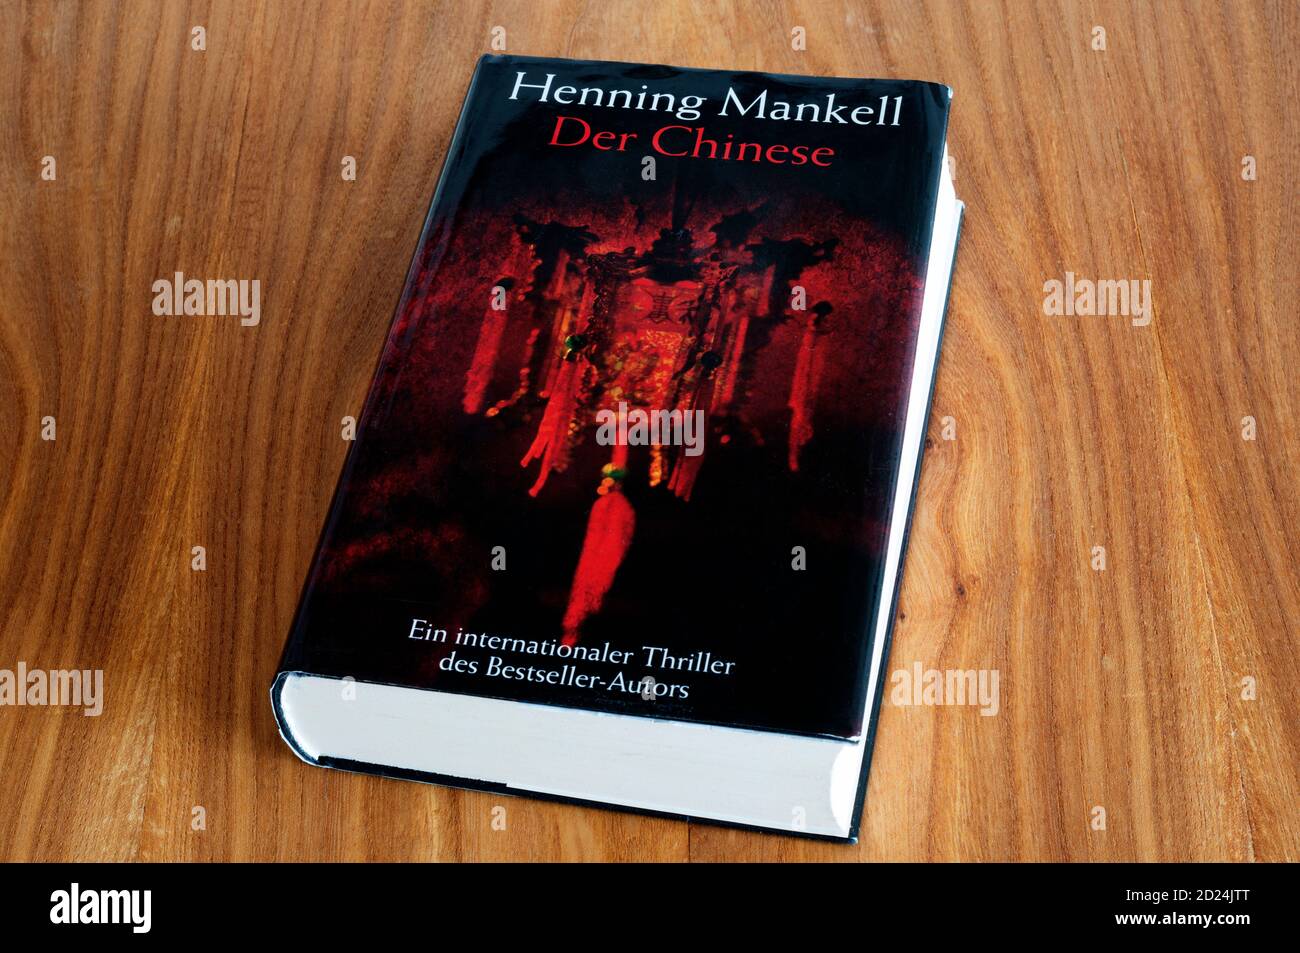 Henning Mankell Der Chinese hardback book Stock Photo